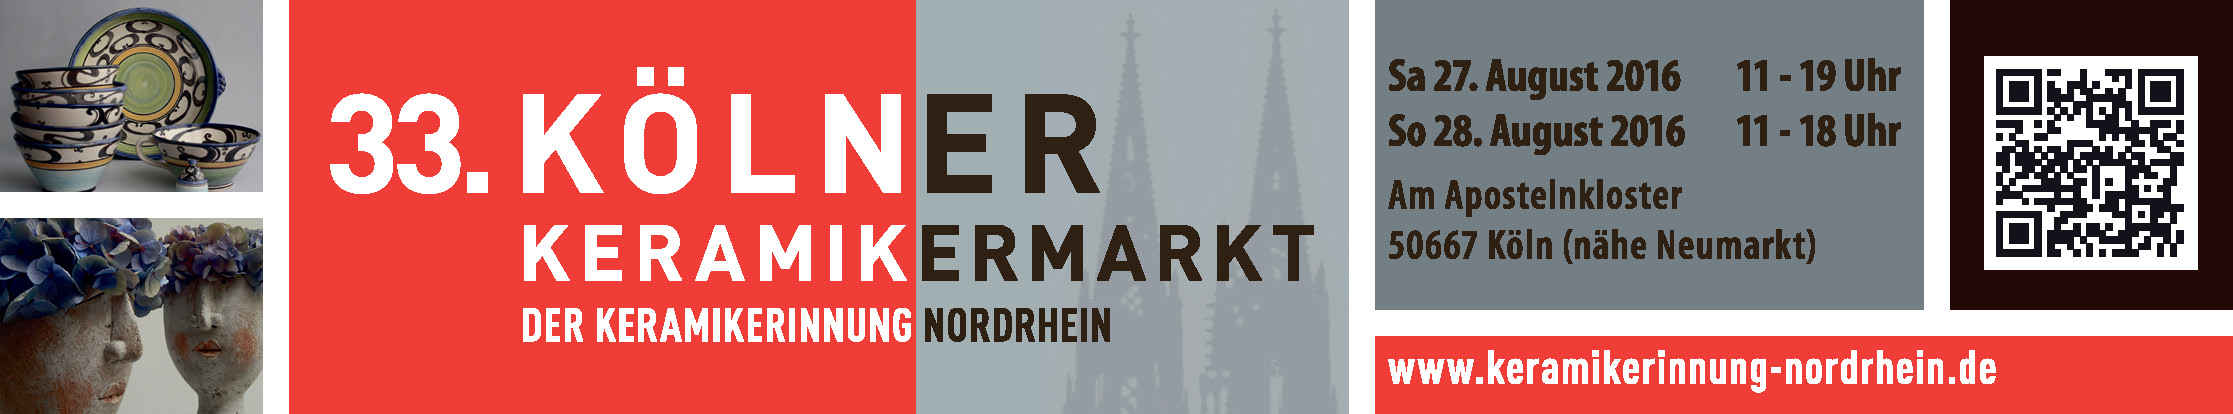 33. Kölner KeramikerMarkt 2016 27.-28. August 2016